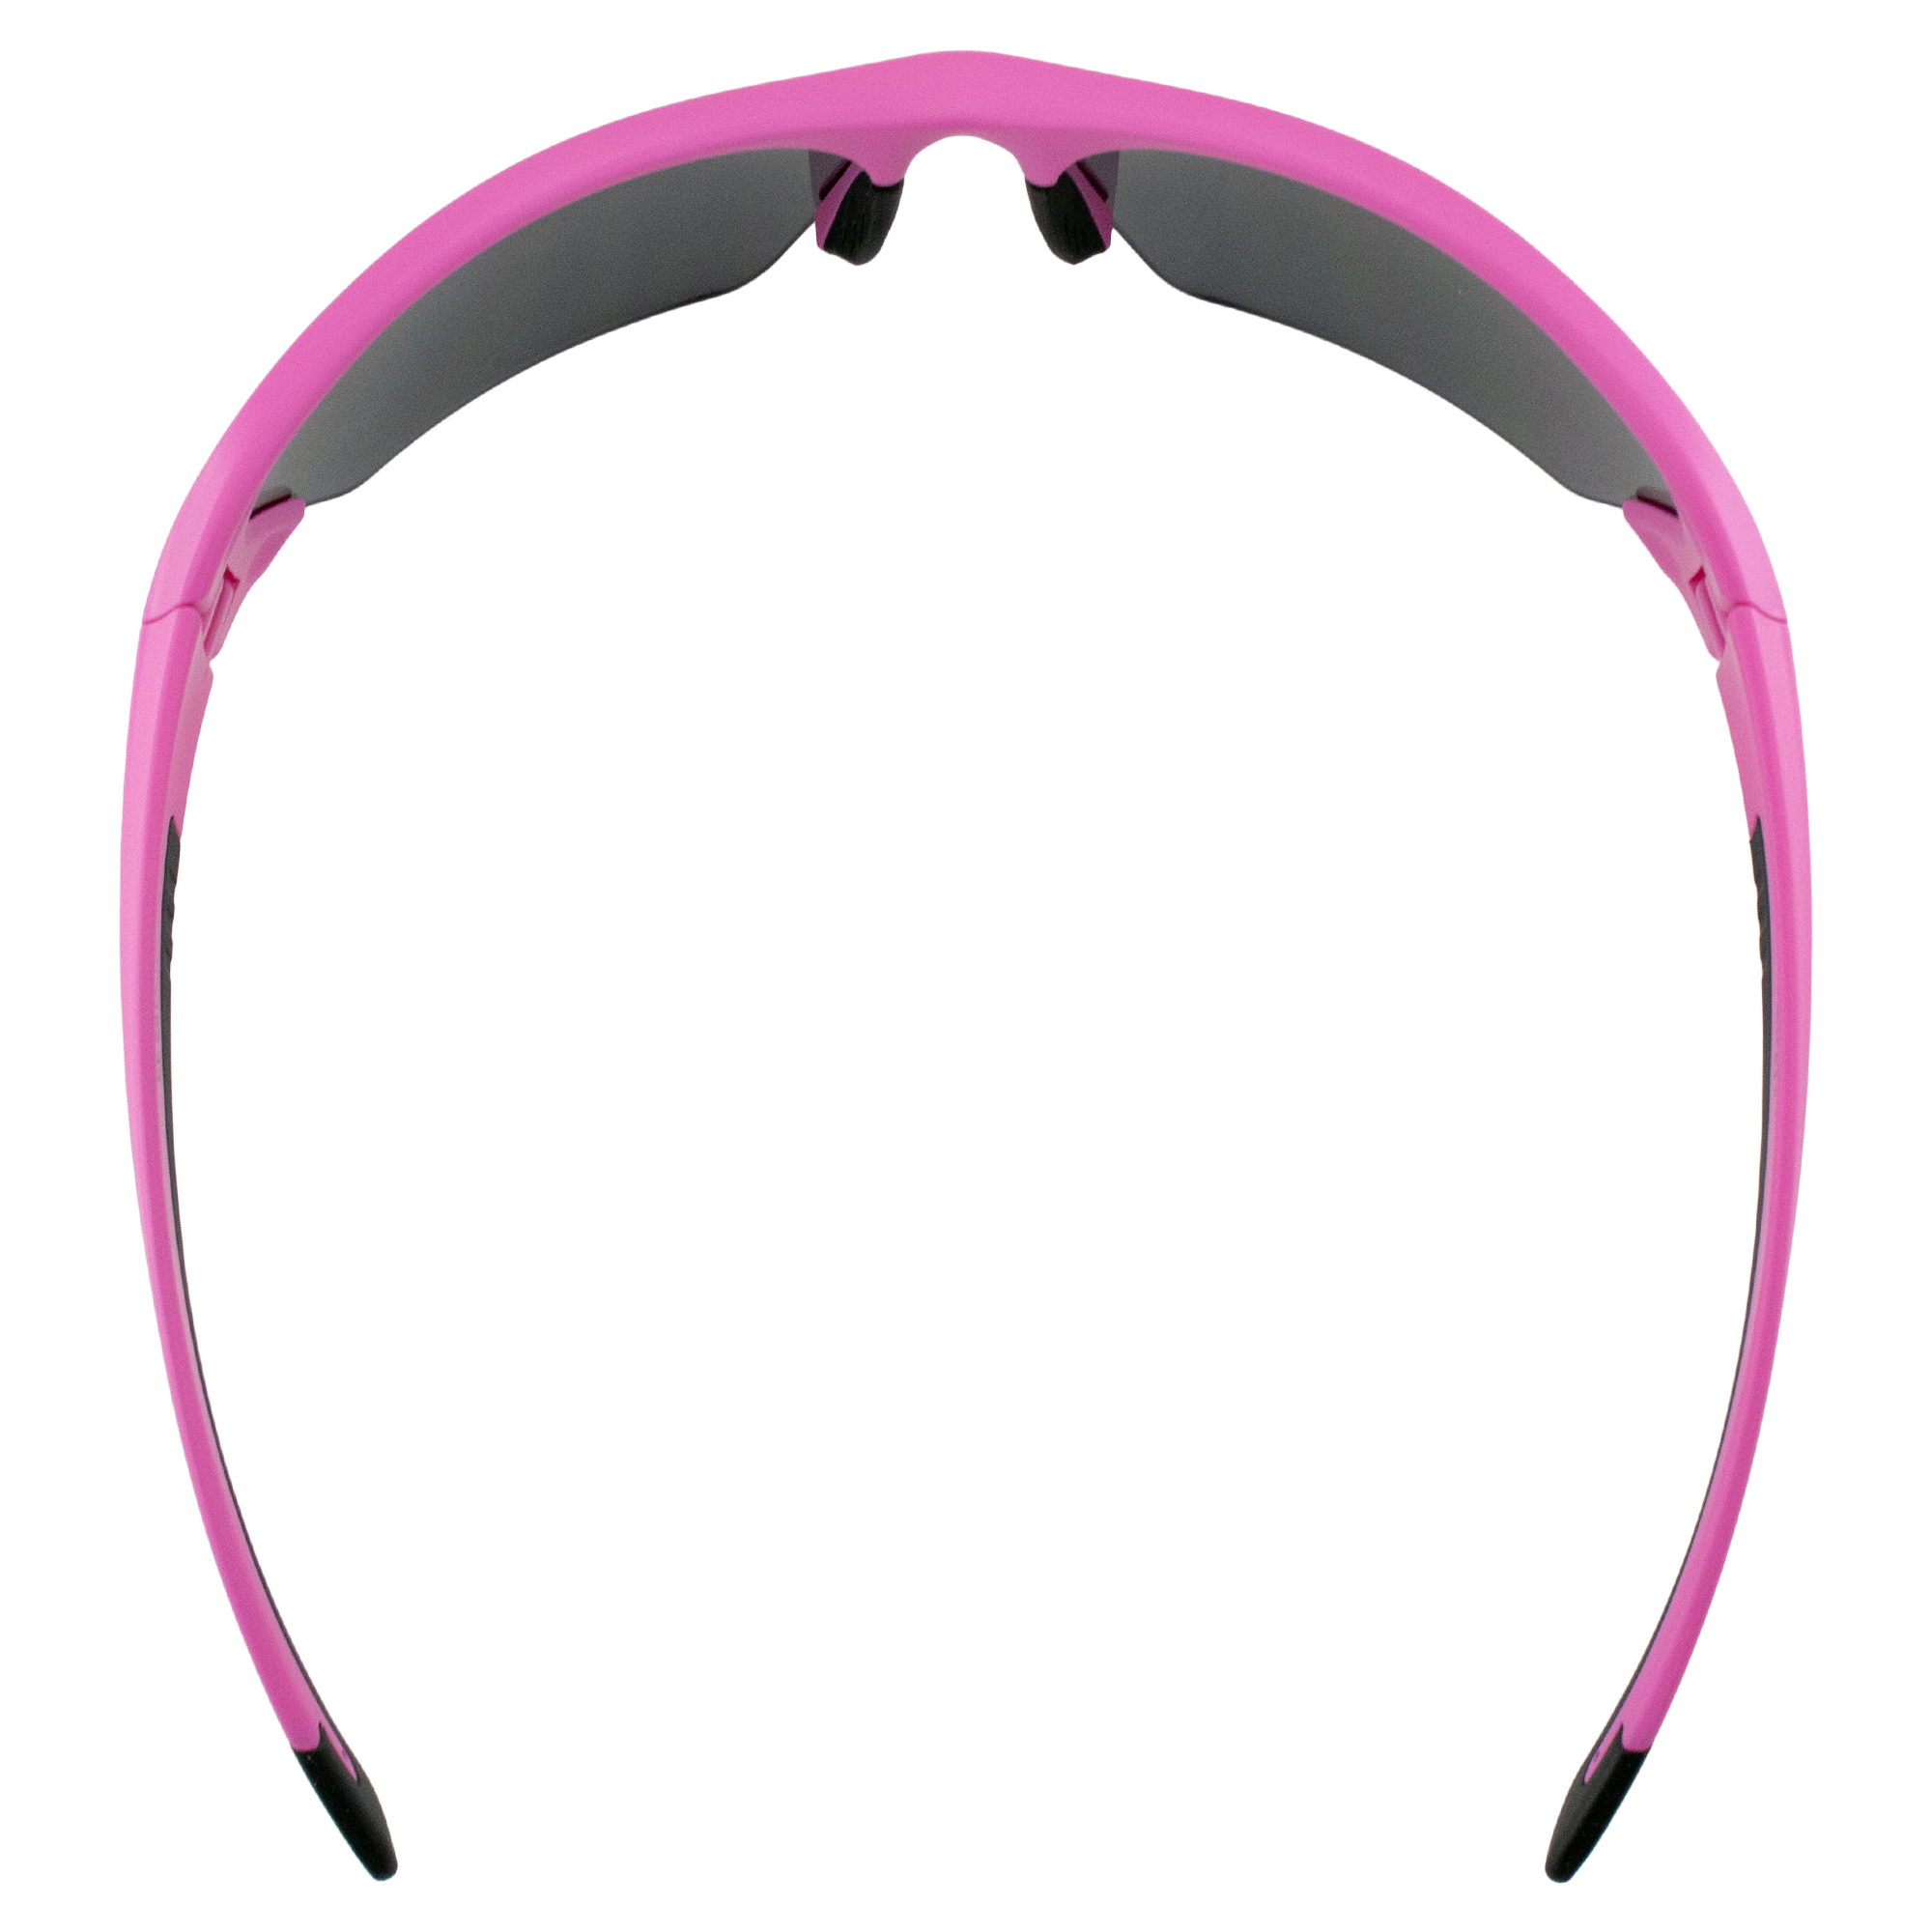 Epoch Eyewear Wake Sunglasses Style Pink with Smoke Lens - image 4 of 8